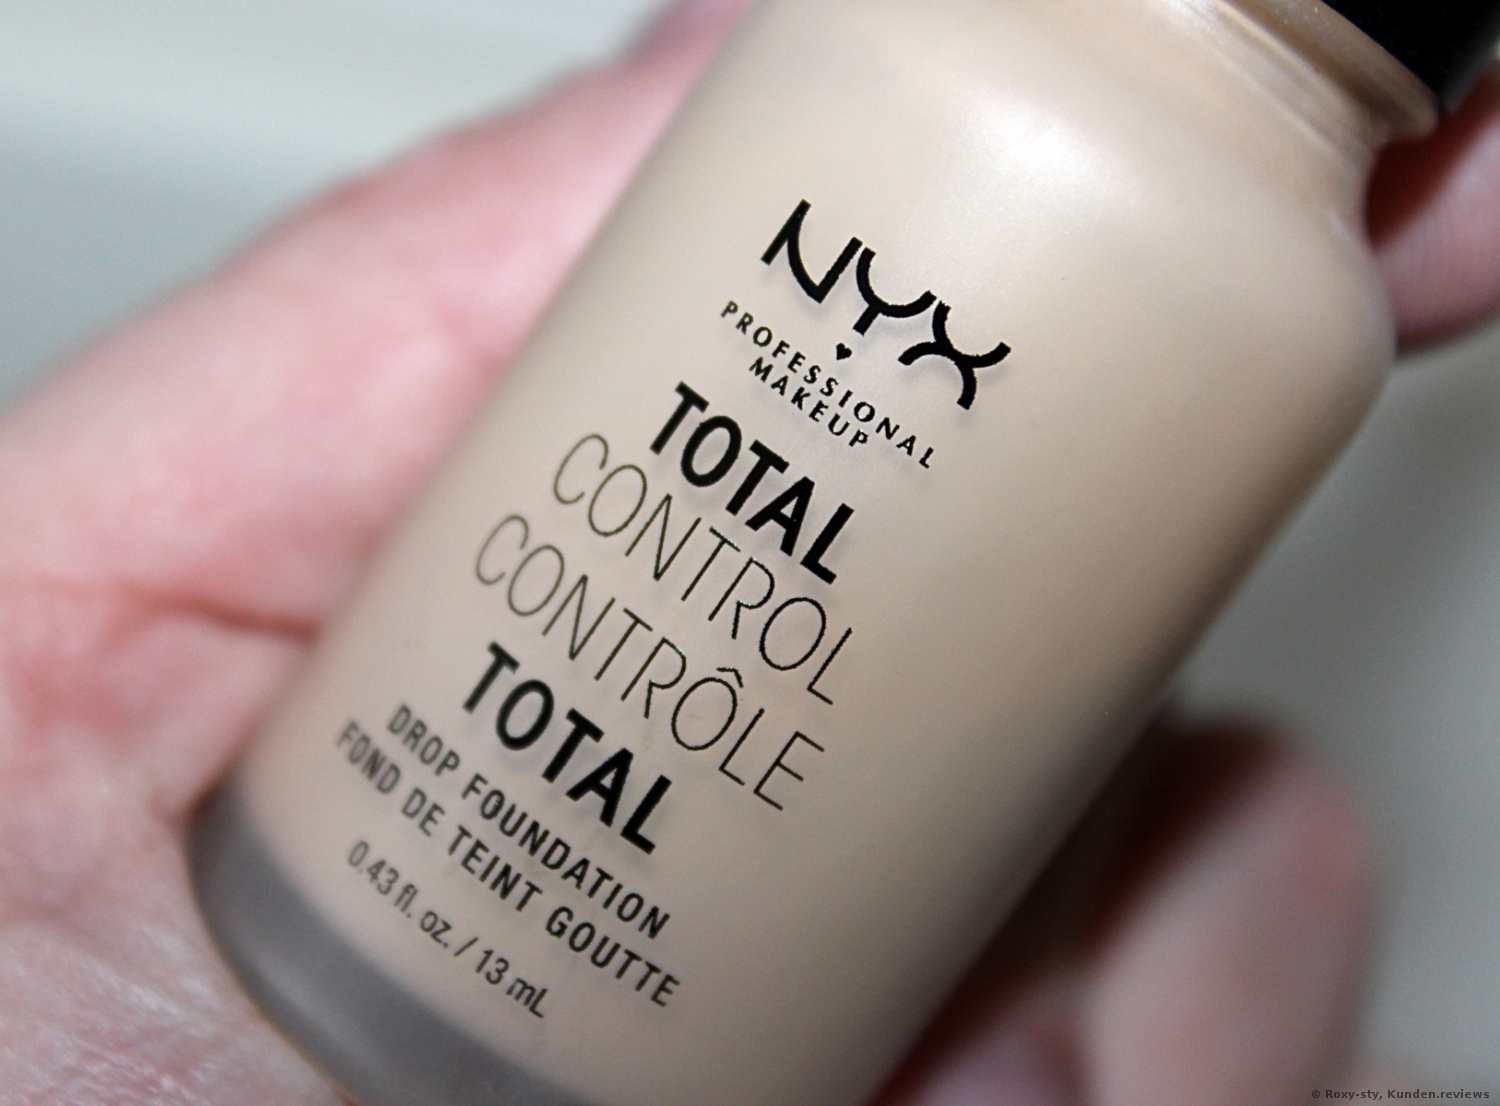 Total Control Drop Foundation von NYX Professional Makeup 